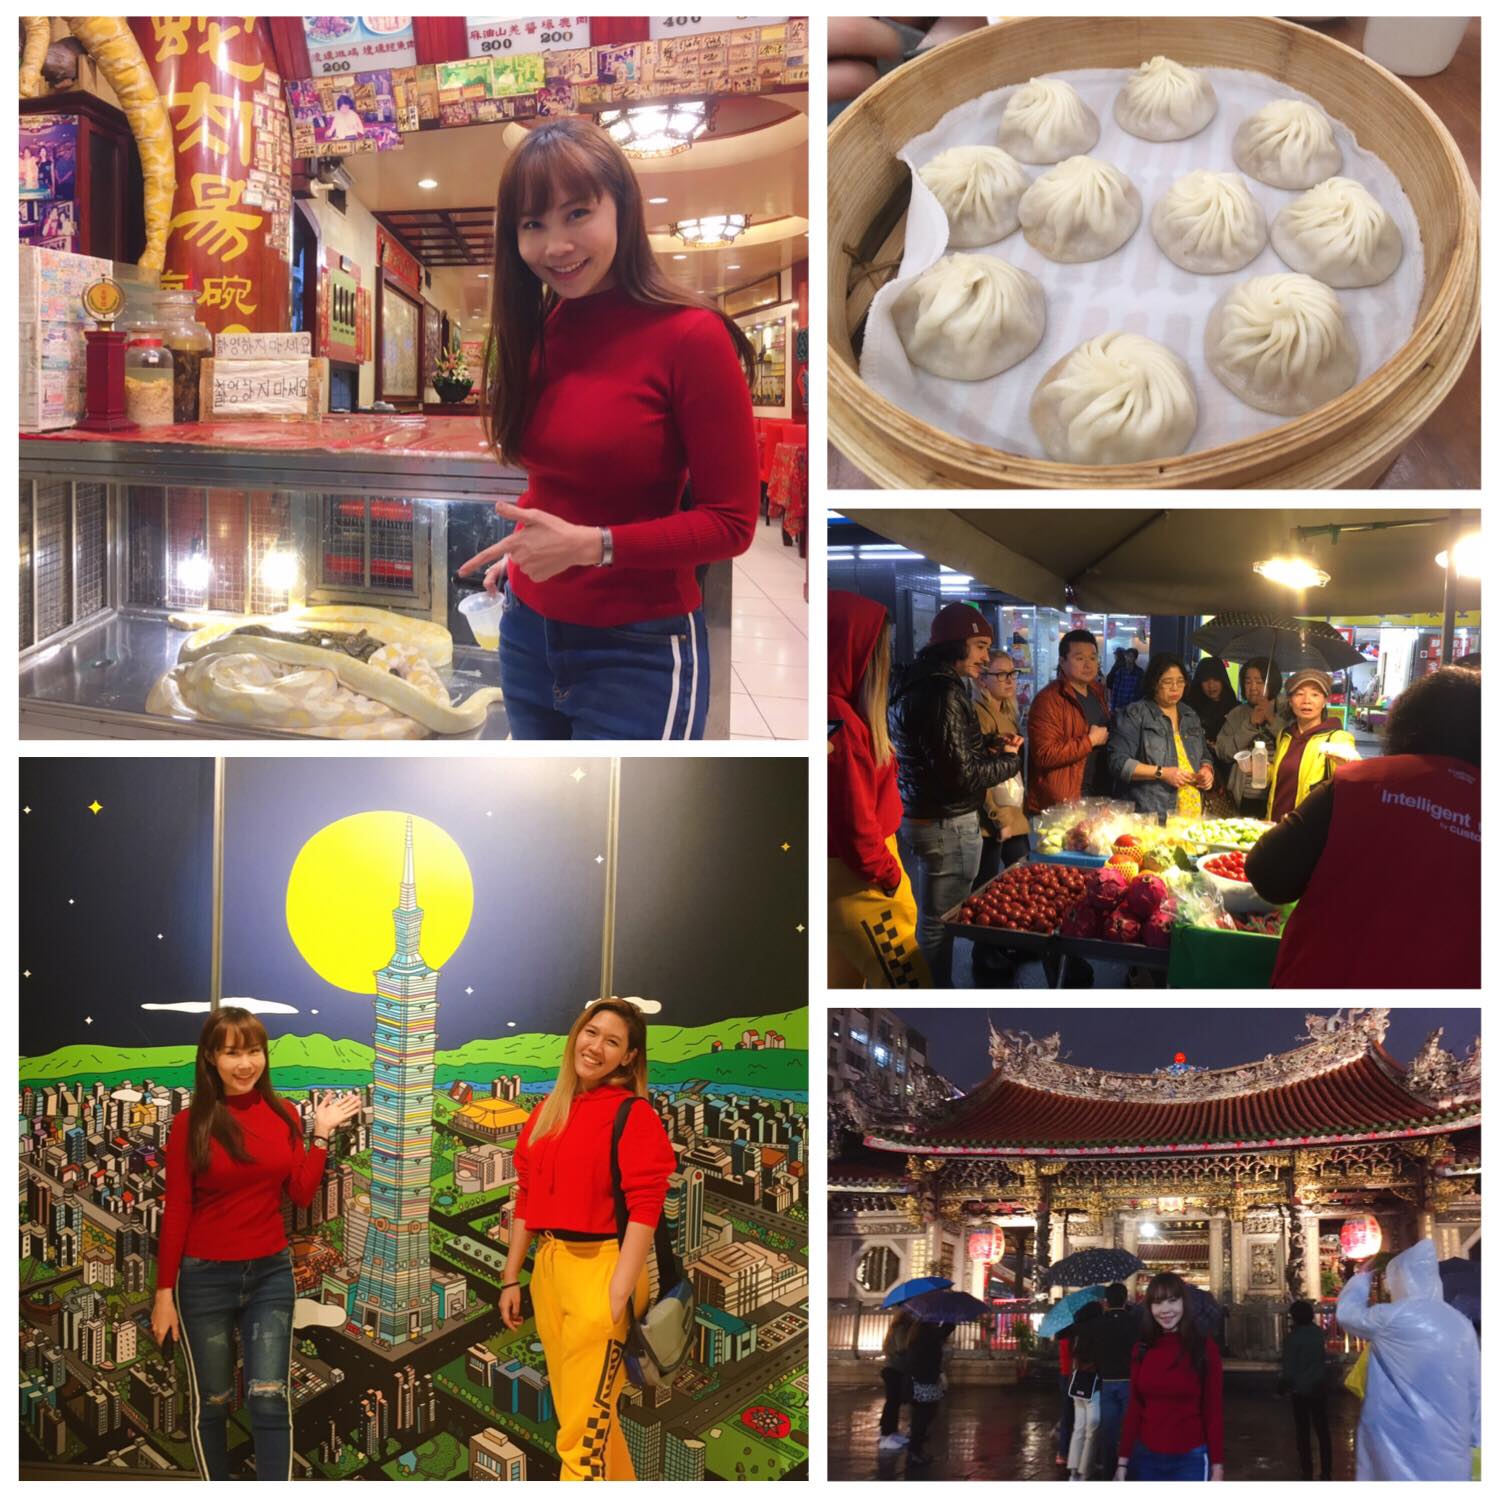 Taipei at Night with Din Tai Fung Dinner #Taipei101 #Taiwan #Taipei #ѹ # #ThaiVietJet #ThaiVietjetAir #VietjetAir #KlookTH #Klook #KlookTravel #点心 #ѹ #ѹ #Ǵµͧ  #TaiwanTourism #TaiwanTourismBureau #Travel #喔熊 #OhBear #台湾 #臺北 #台北 #TheHeartOfAsia #lungshantemple #huaxi #huaxinightmarket #dintaifung #dintaifungtaipei #dintaifungtaipei101 